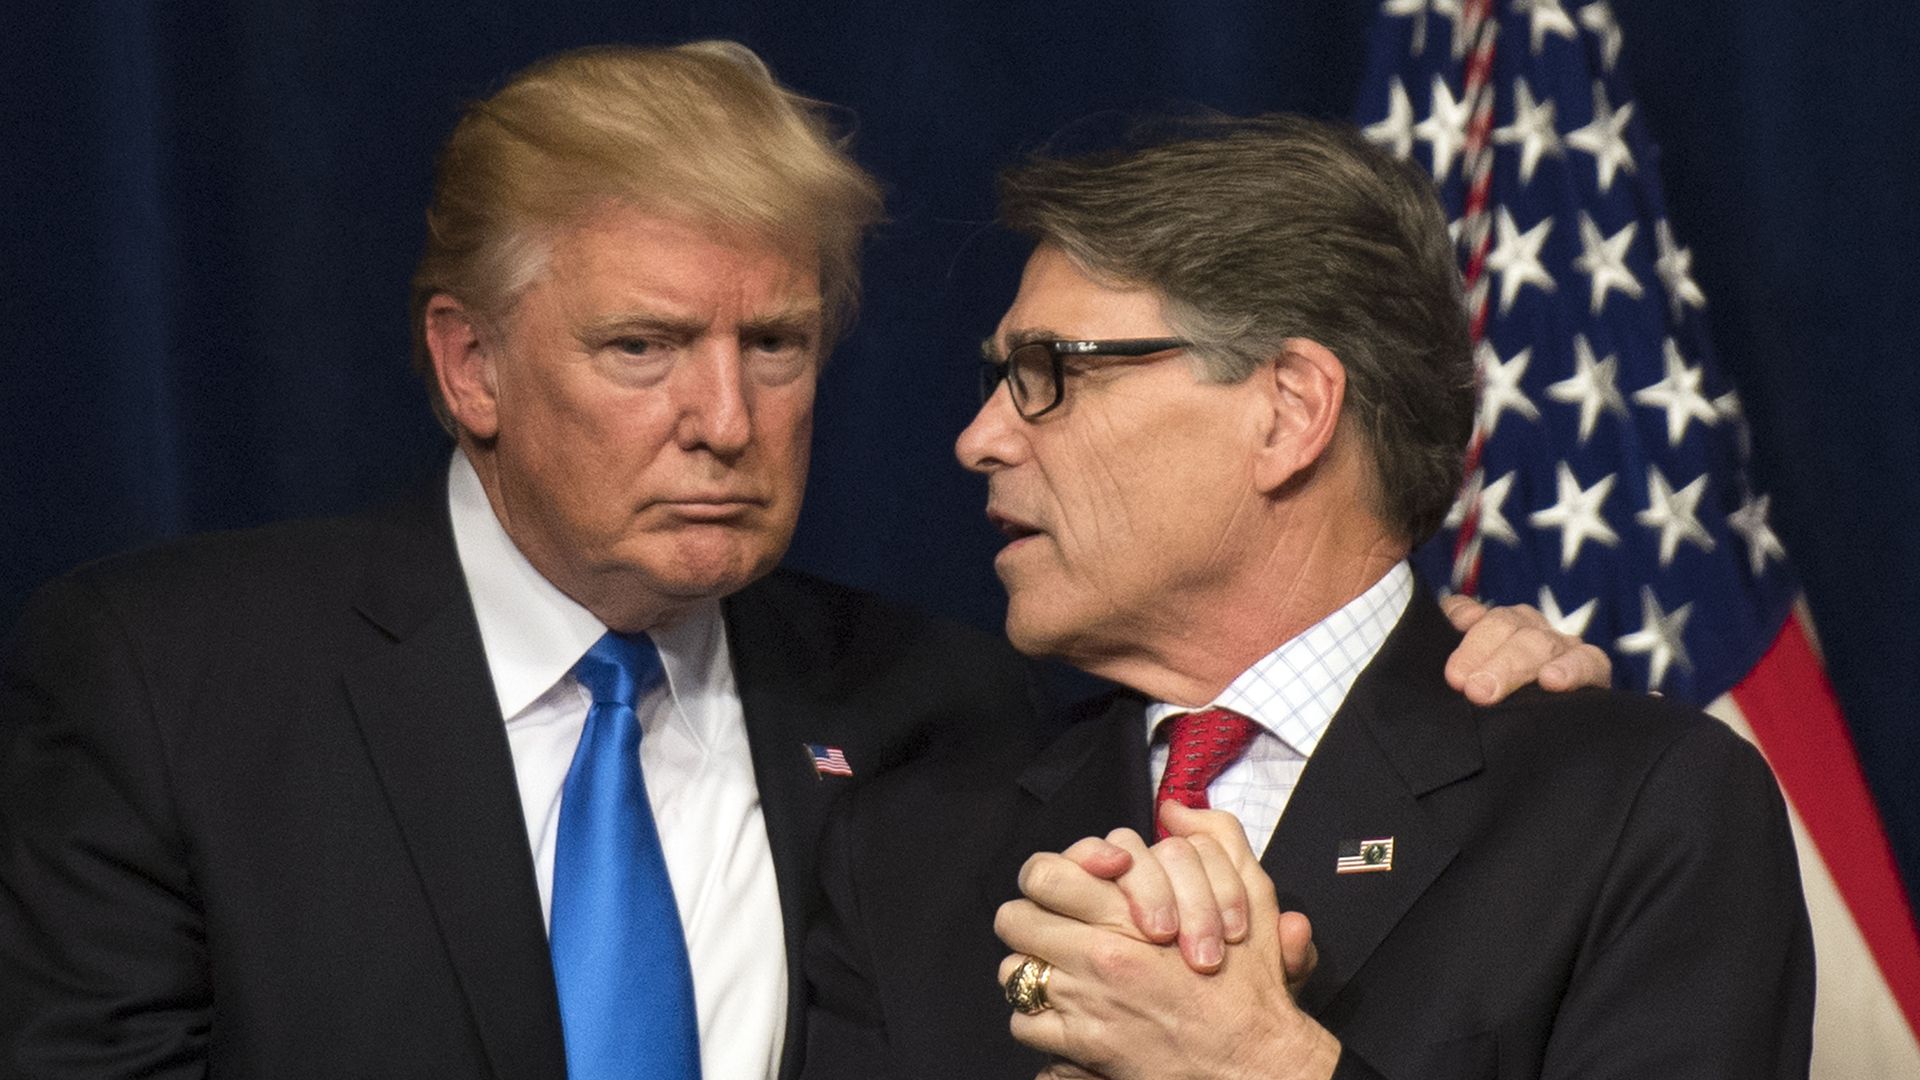  U.S. President Donald Trump stands next to Energy Secretary Rick Perry